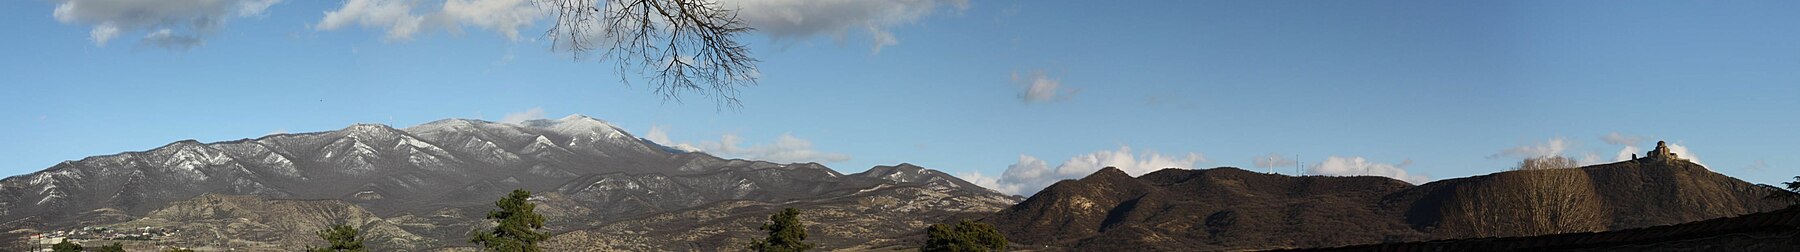 Mtskheta mountain.jpg